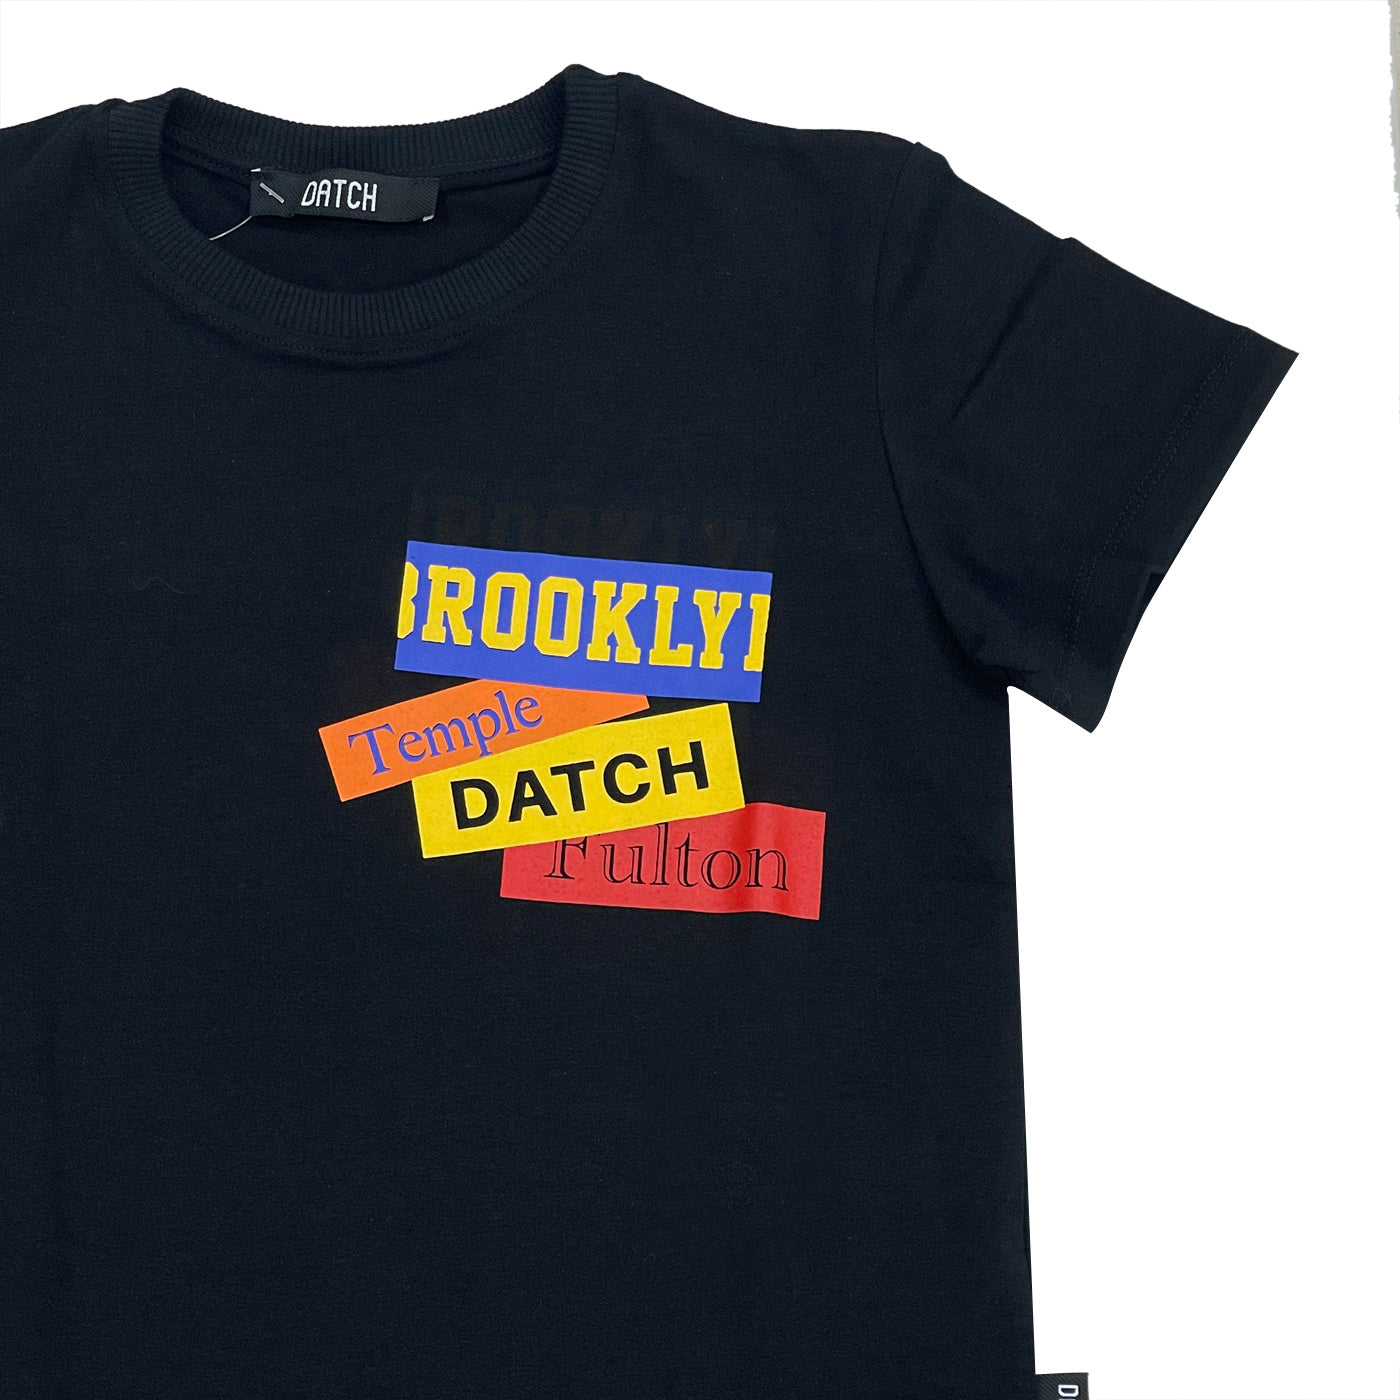 Datch t-shirt ragazzo